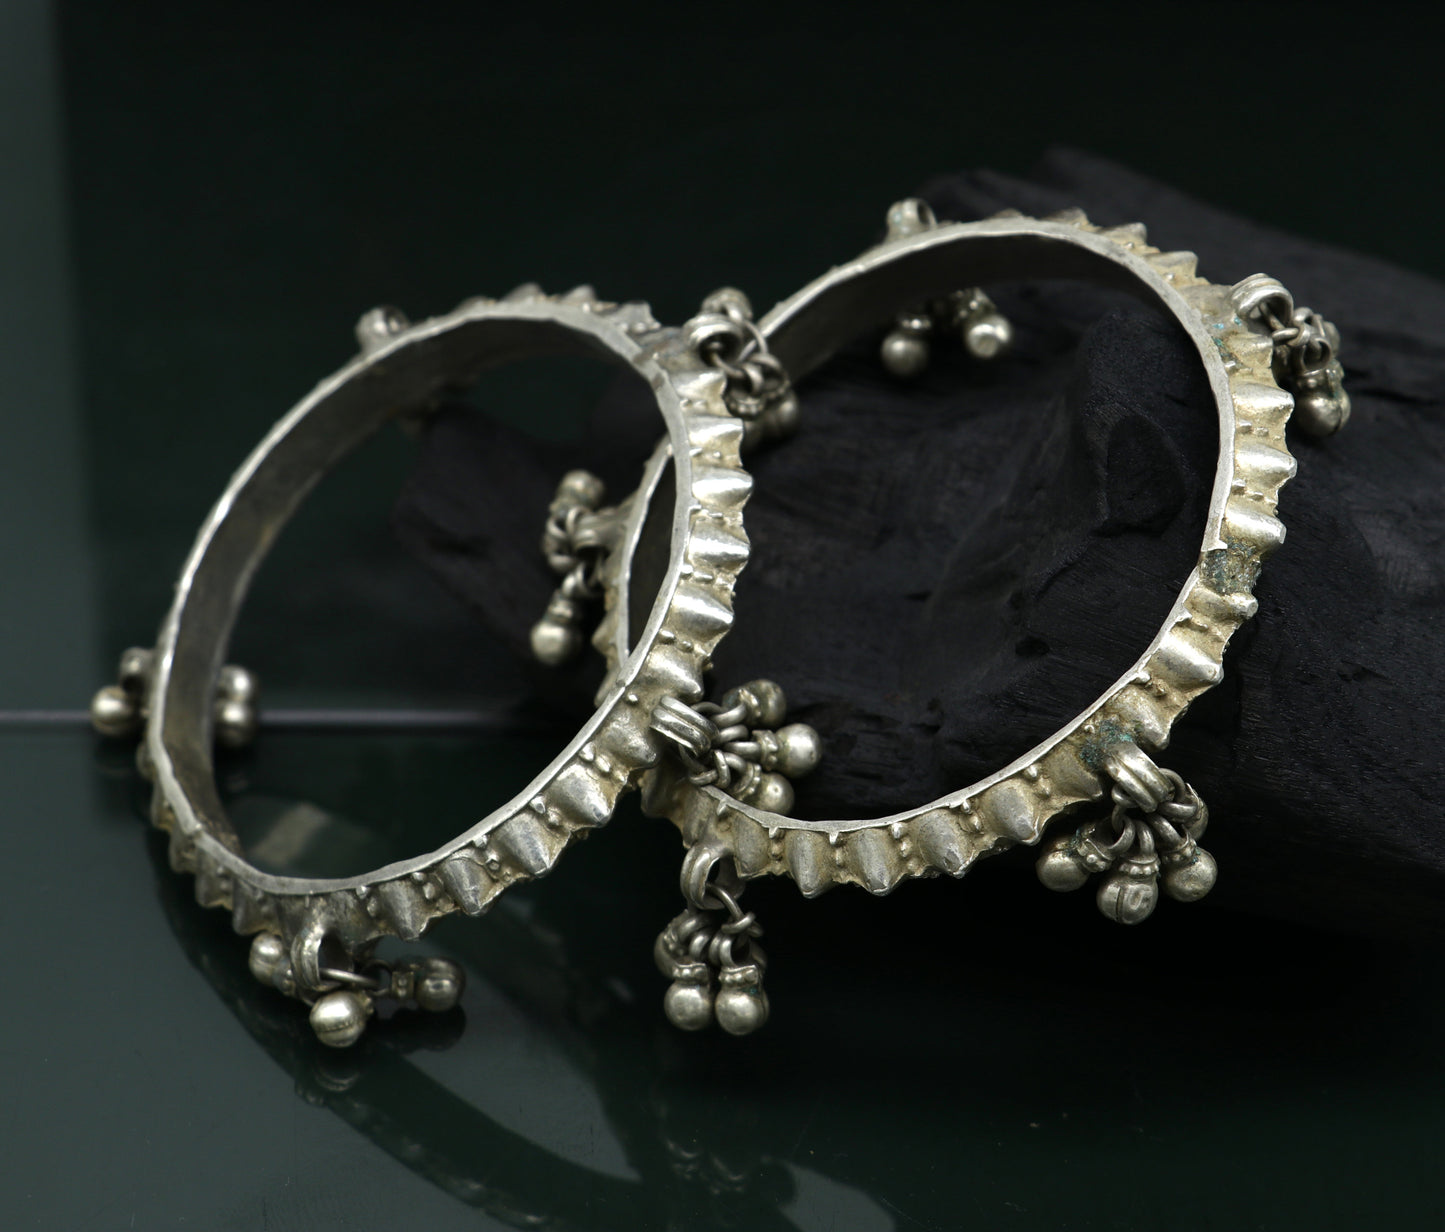 Solid silver handmade vintage antique traditional banjara bangle bracelet with jingling bells, indian ethnic tribal bangles for girl's sba21 - TRIBAL ORNAMENTS